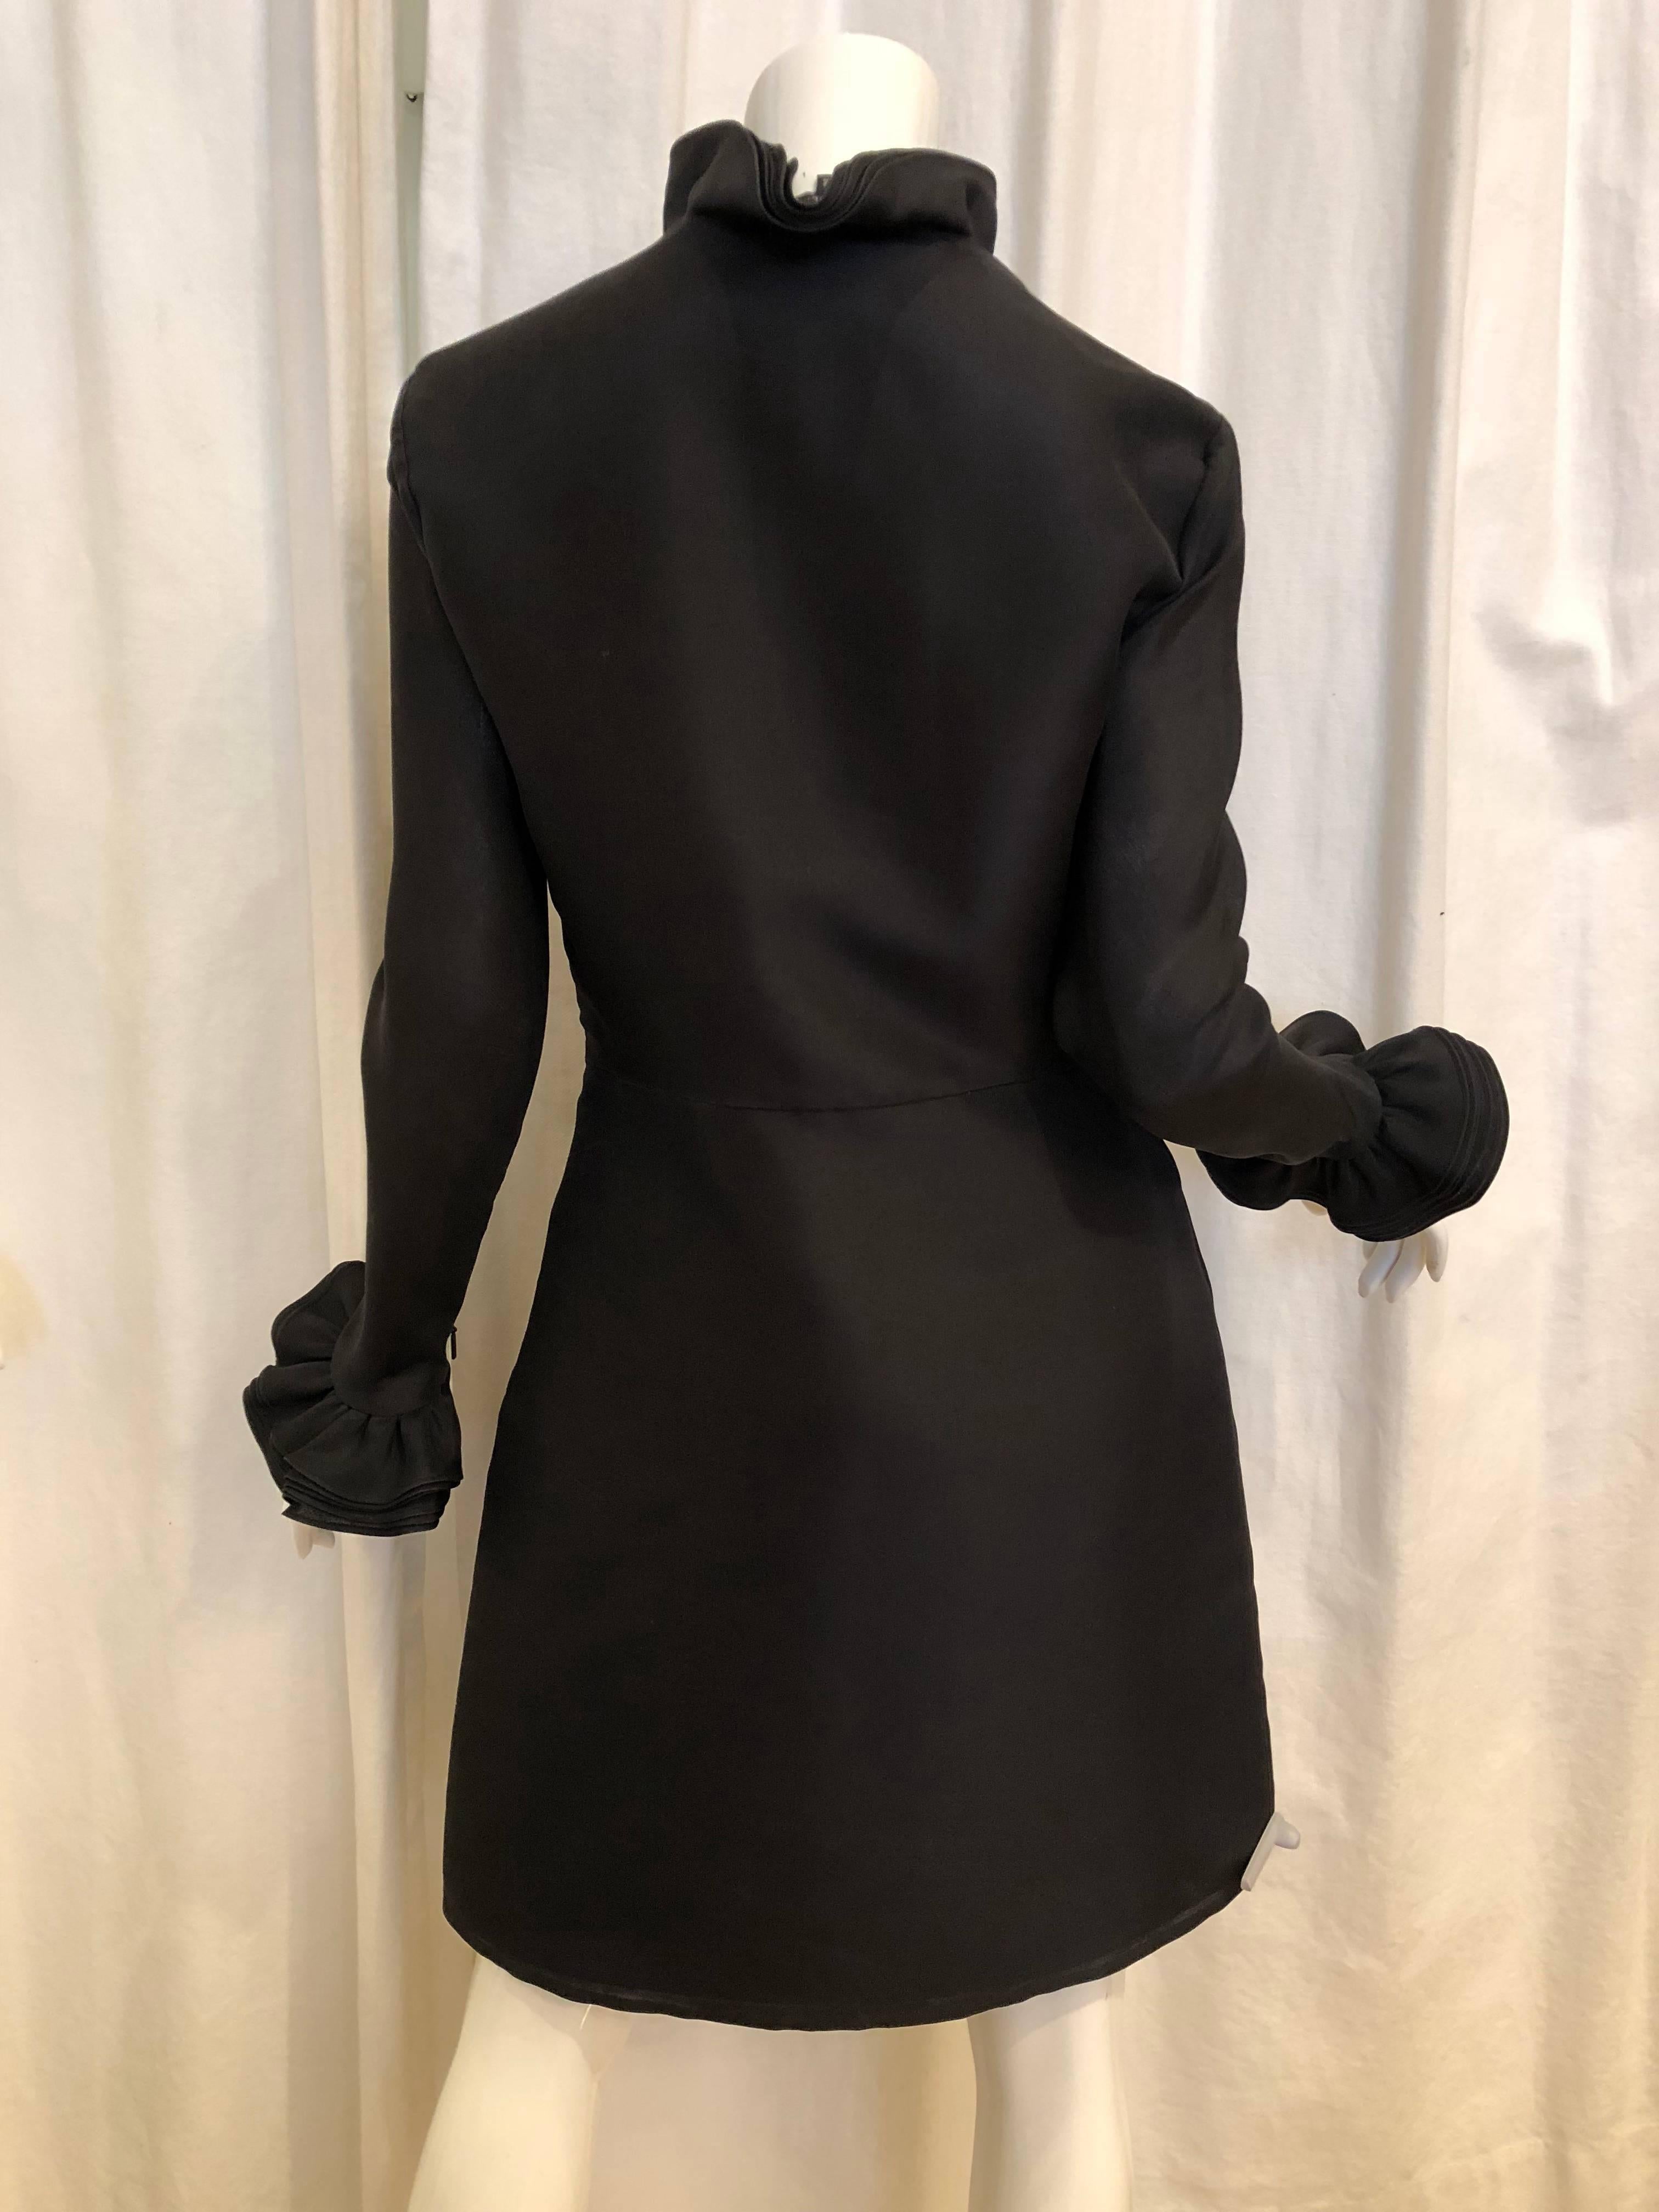 Long Sleeve Silk Organze Dress with Ruffle Collar/Sleeve. Zipper Sleeves and side dress.